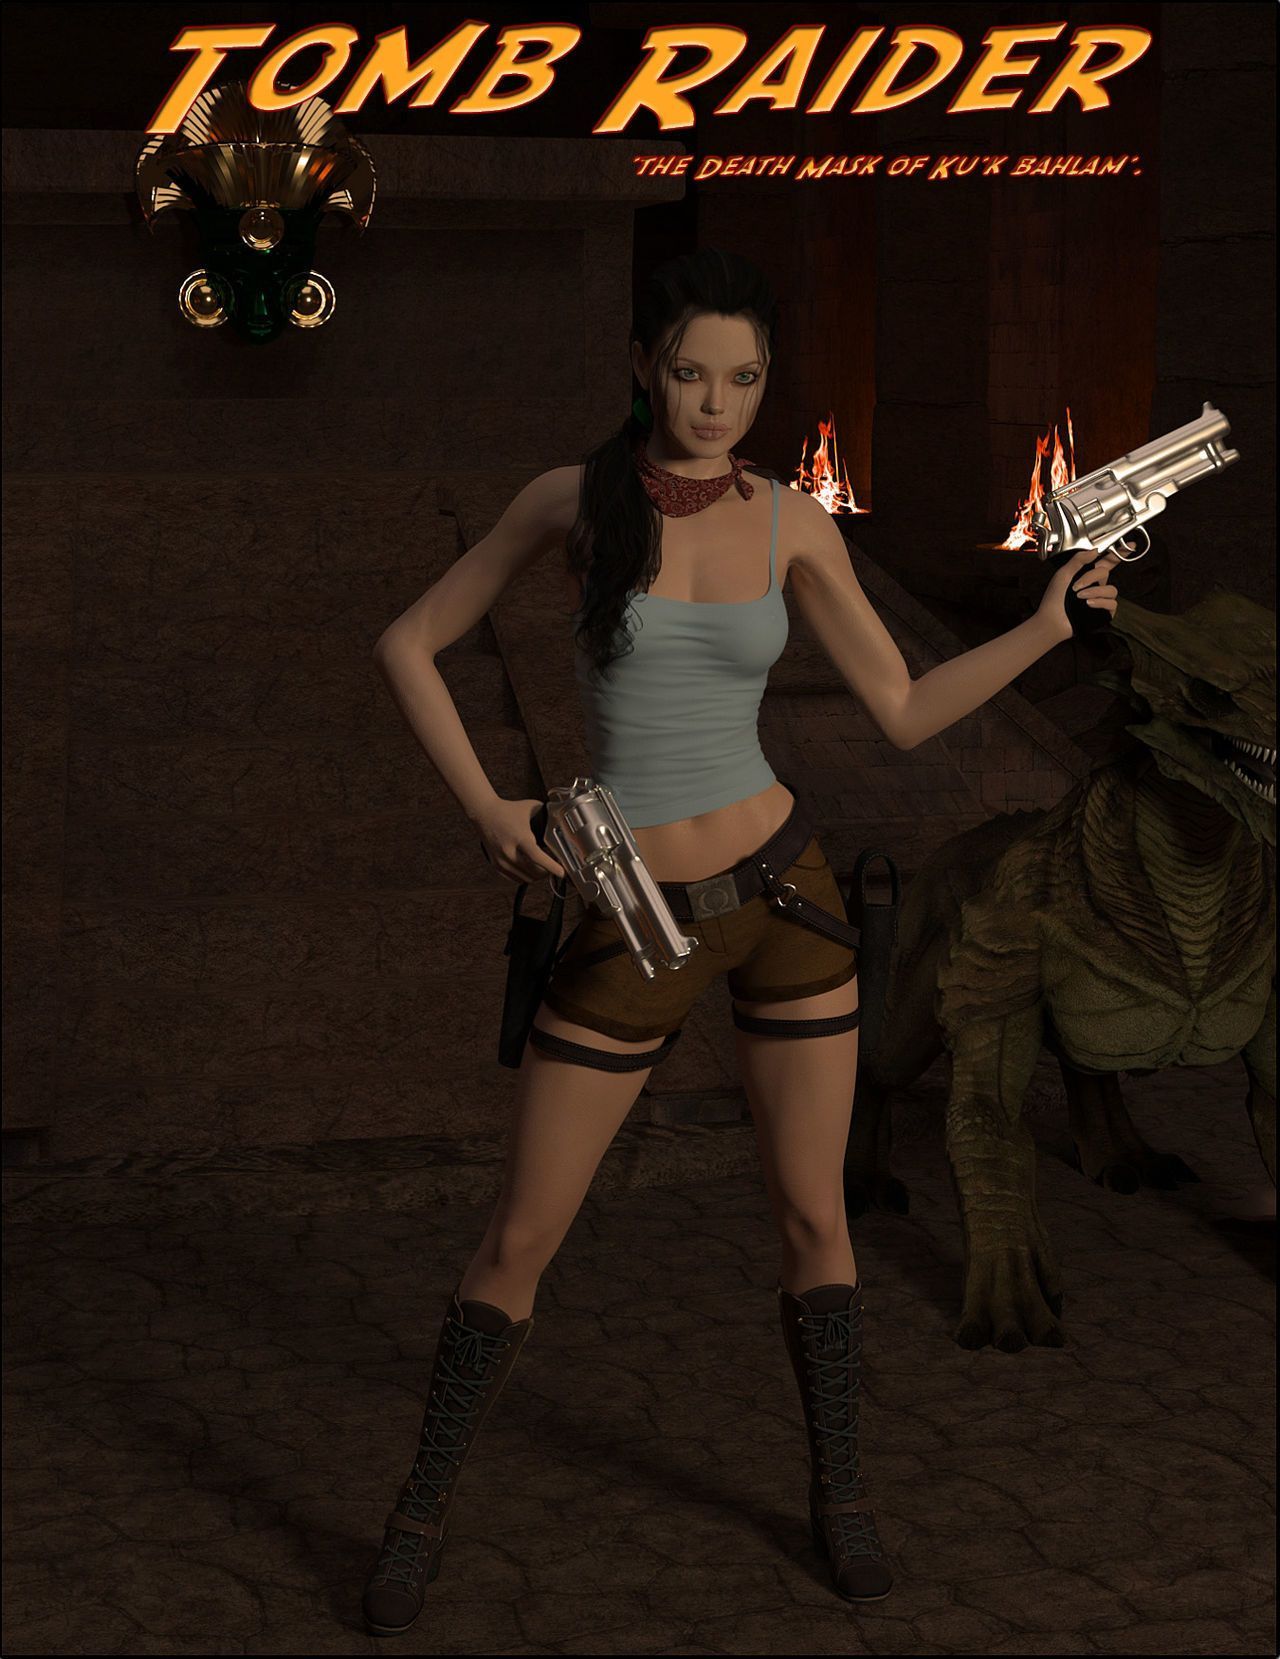 DarkSoul3D - Tomb Raider - The Death Mask of \'Ku\'k Bahlam\'